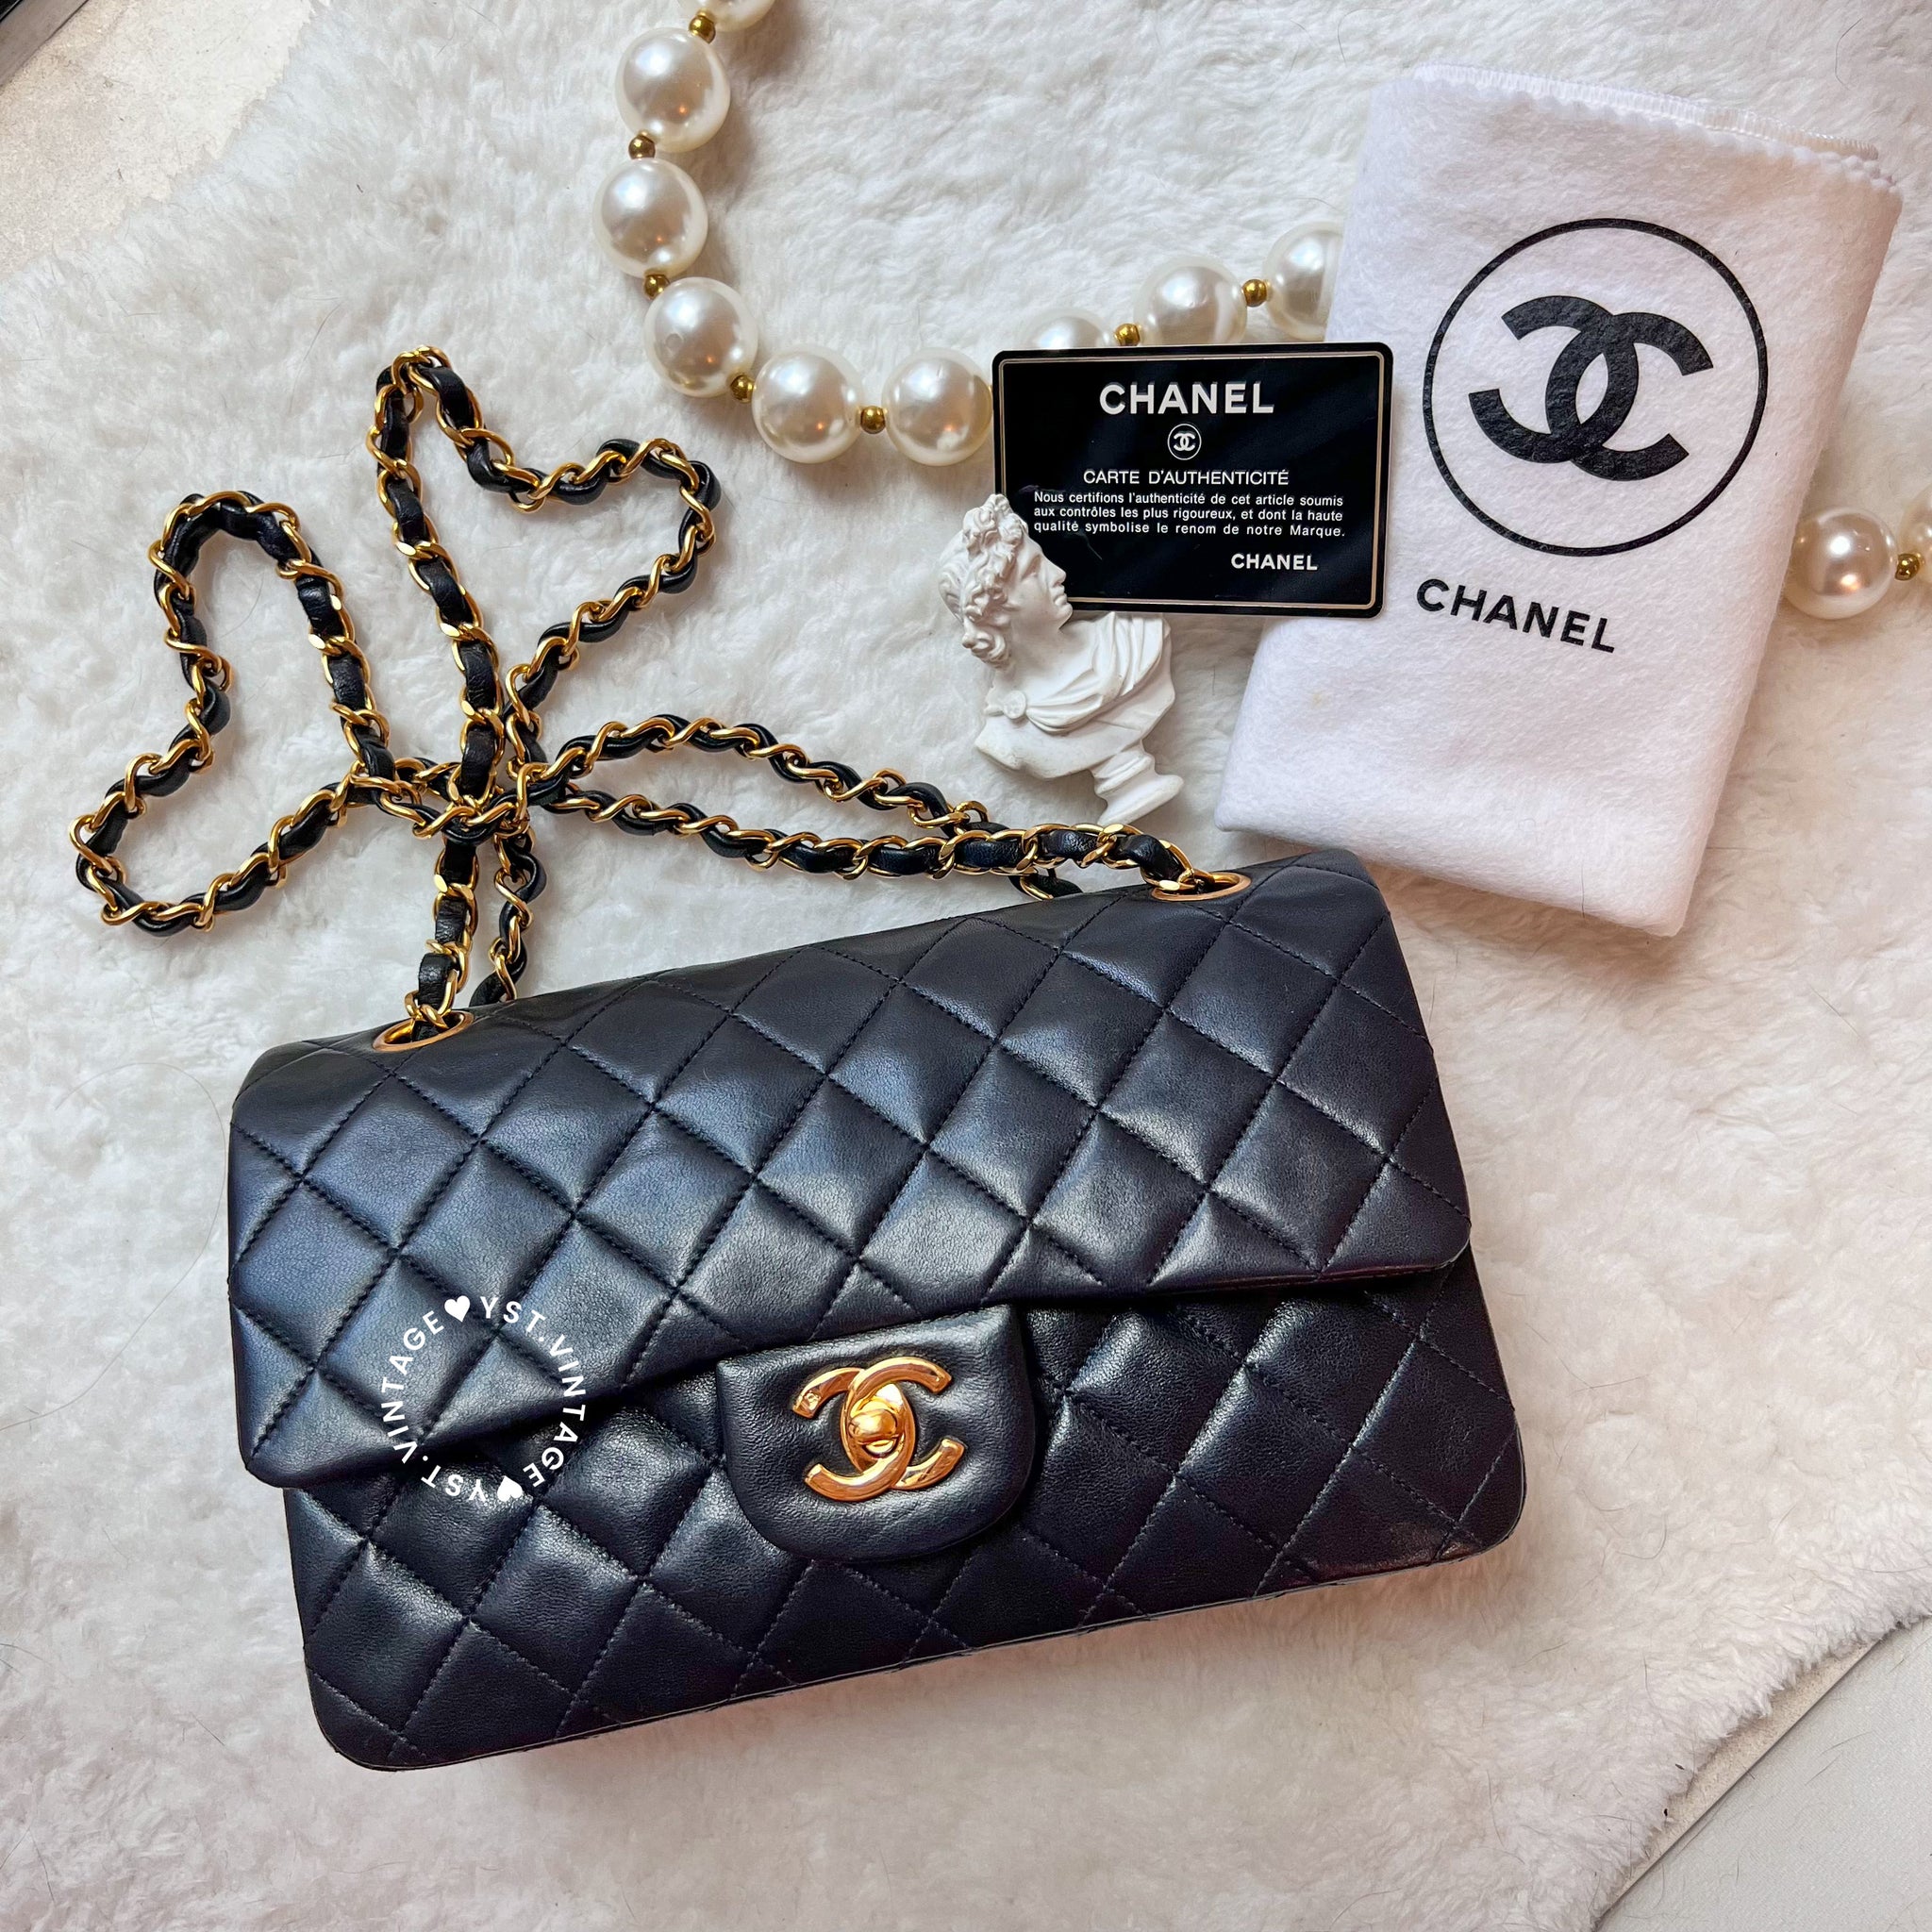 Chanel Fan Forum  Solve your extravagant desires on Instagram